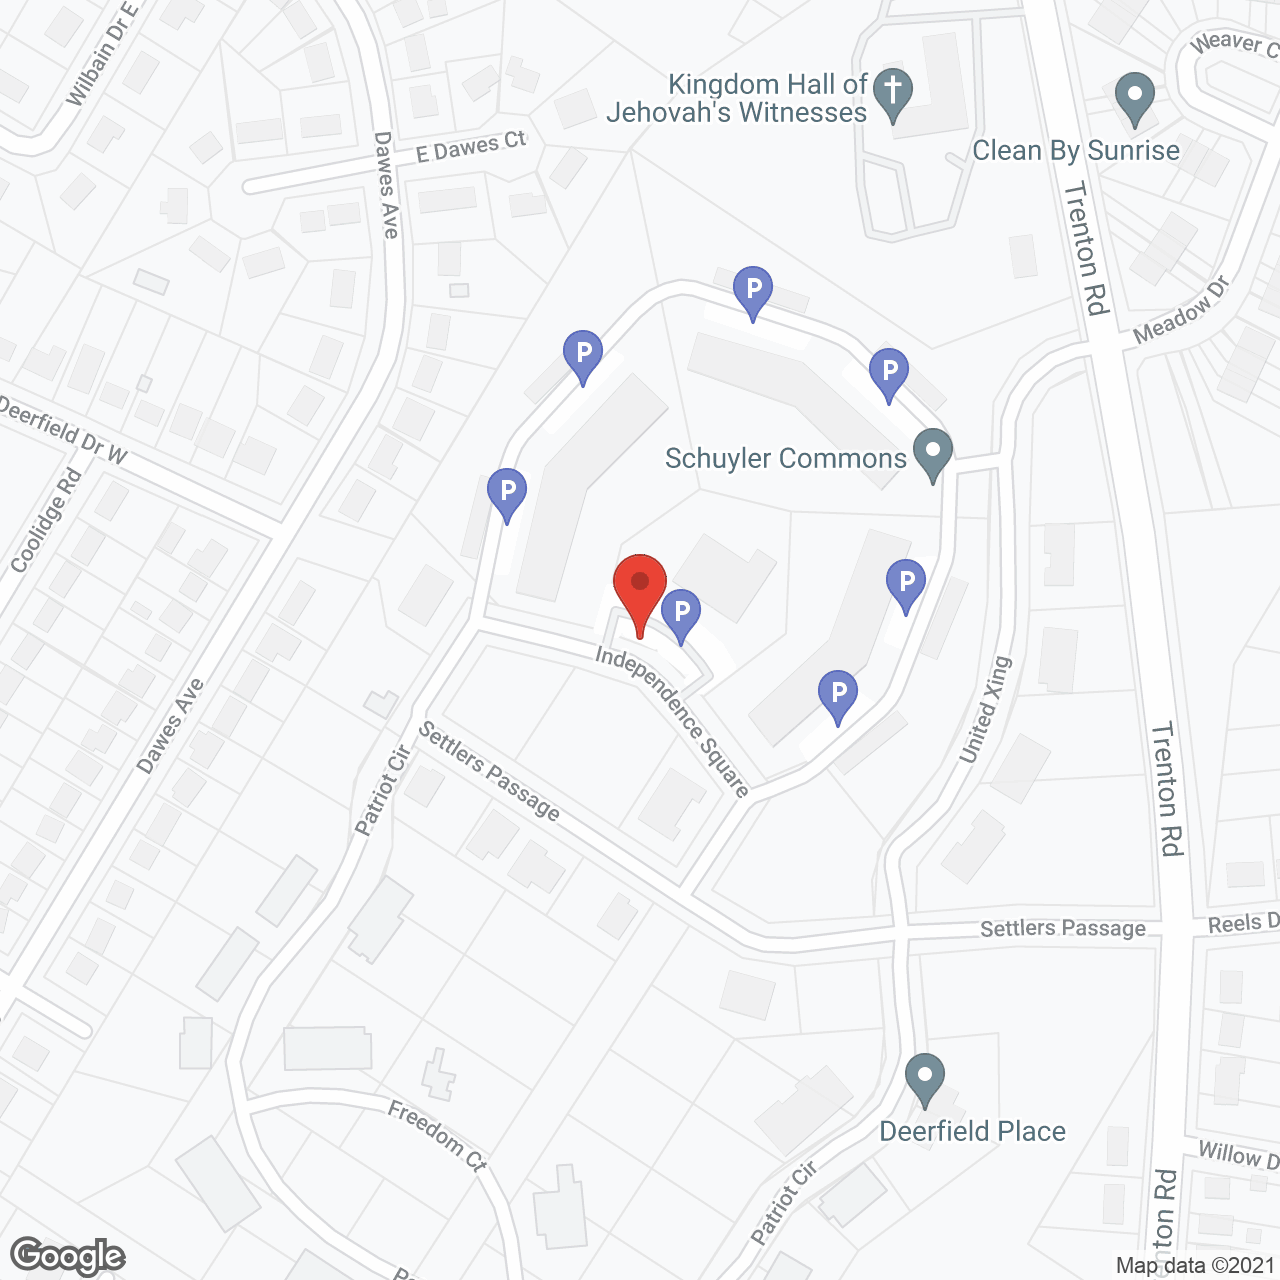 Schuyler Commons in google map